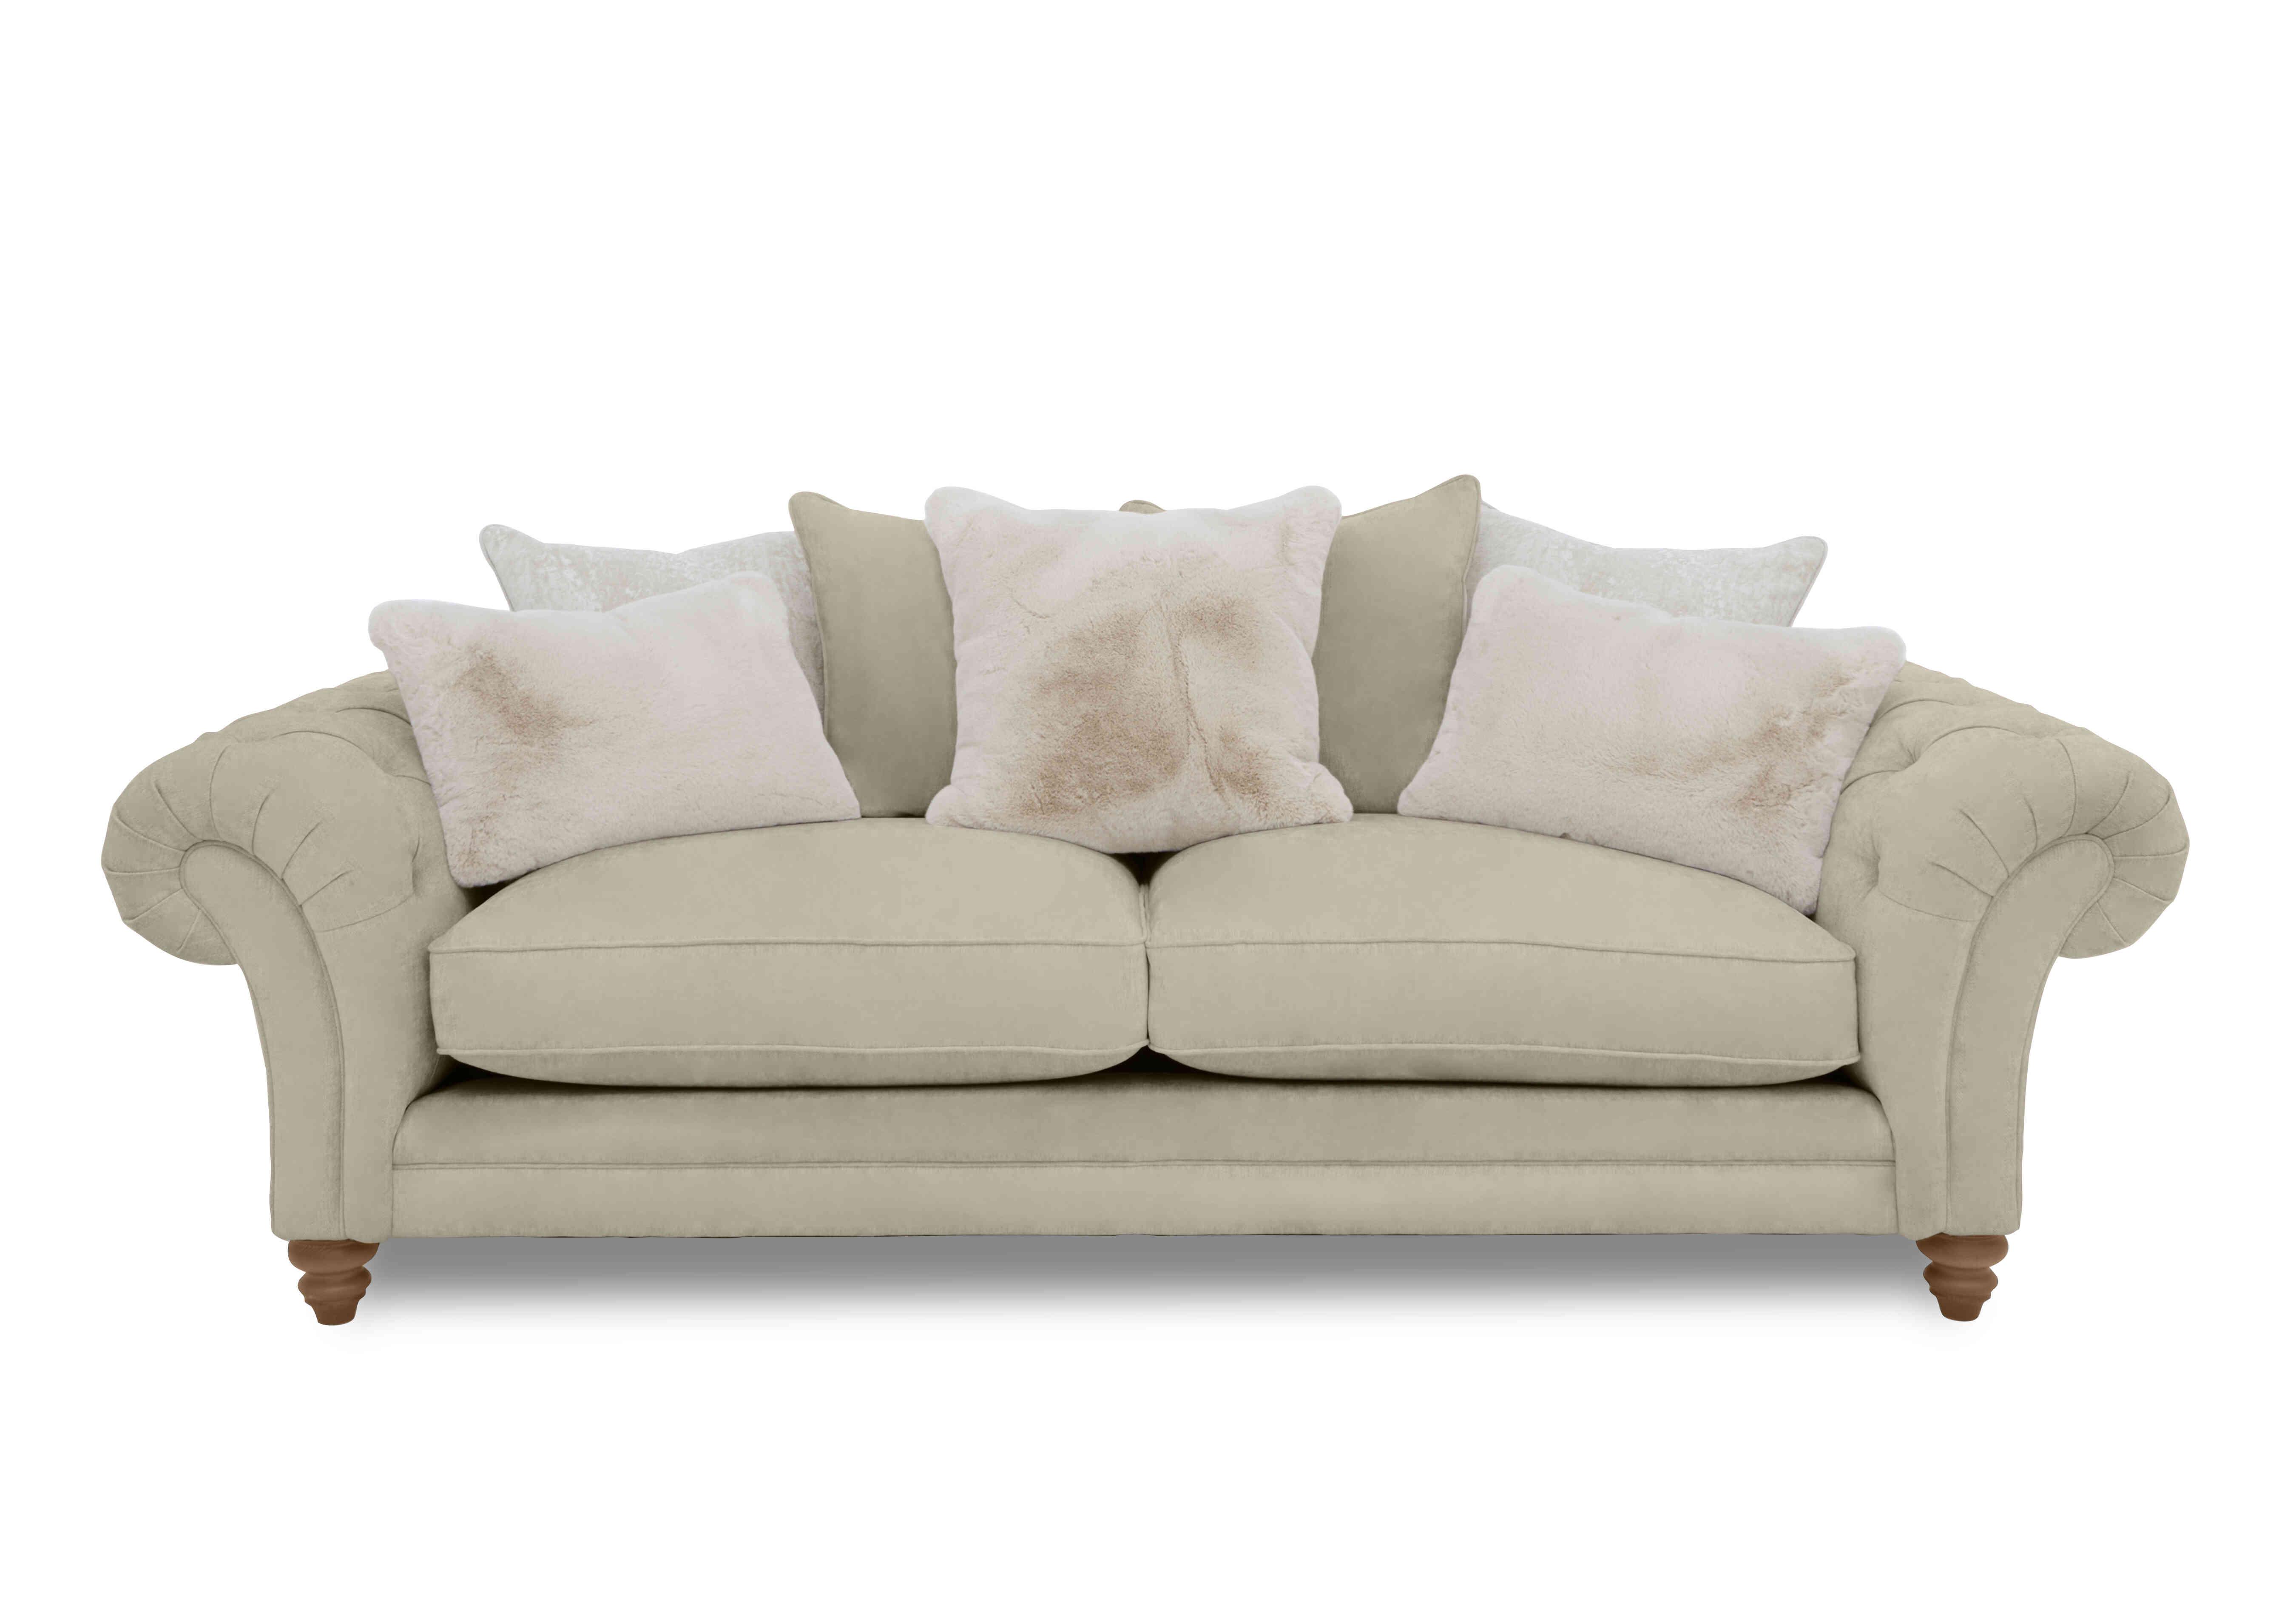 Blenheim 4 Seater Scatter Back Sofa in Marlborough Wicker Ivory Of on Furniture Village